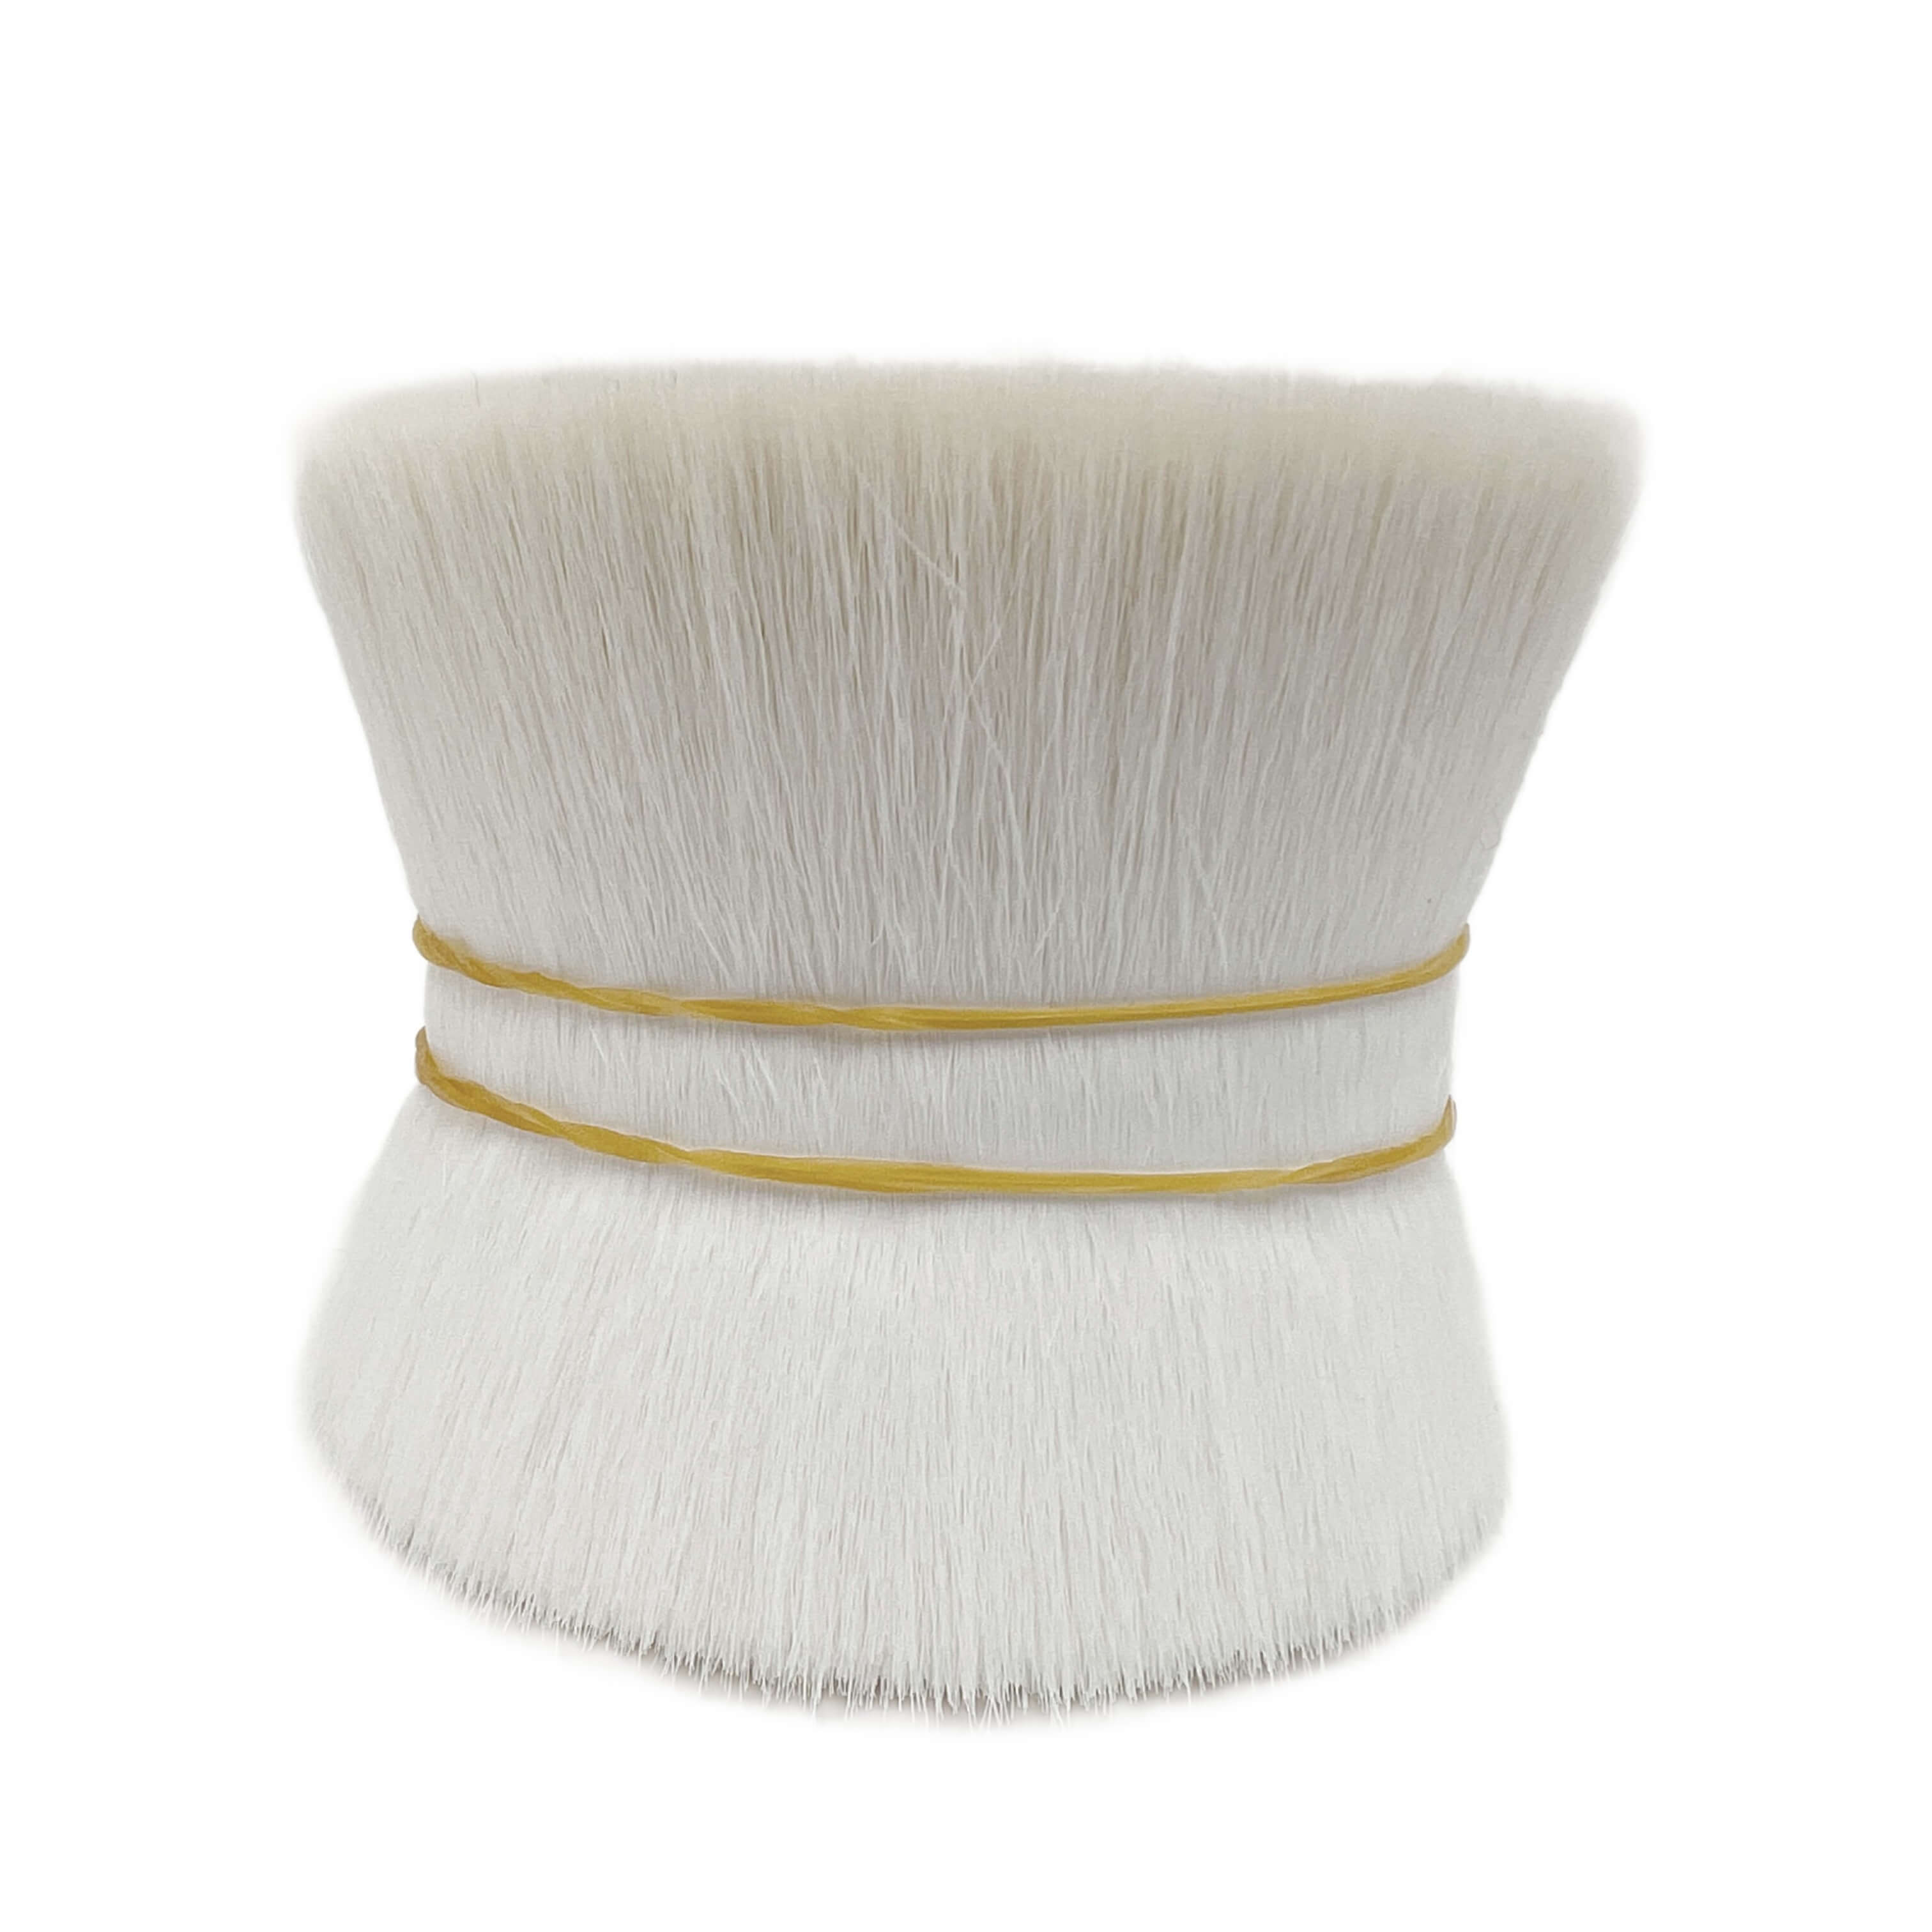 Are XGF goat hair makeup brushes good?